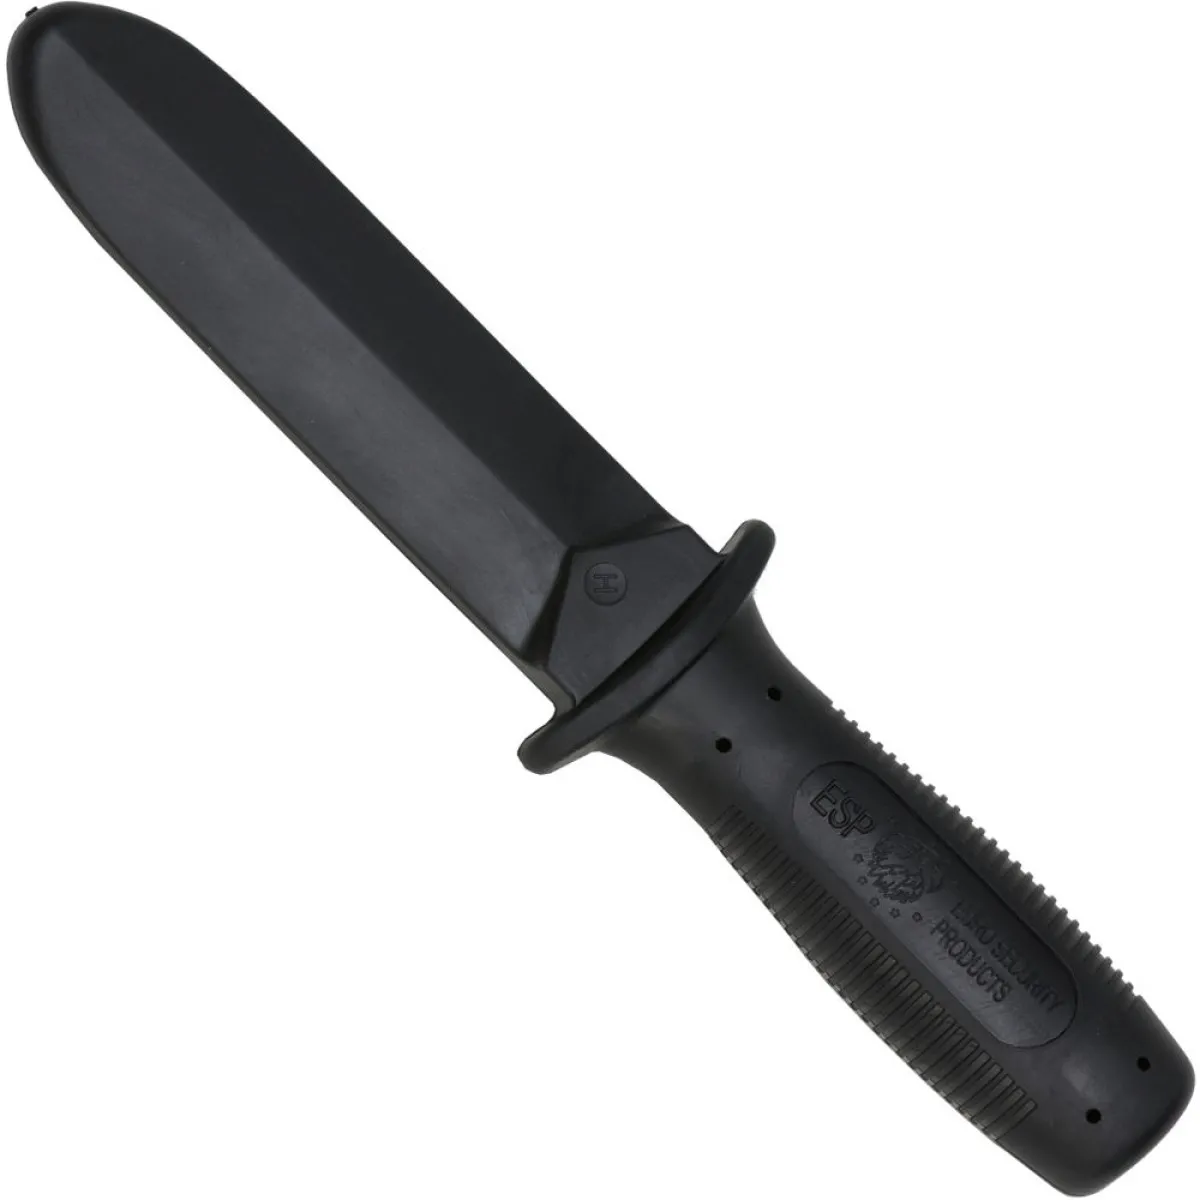 Training knife made of soft plastic short